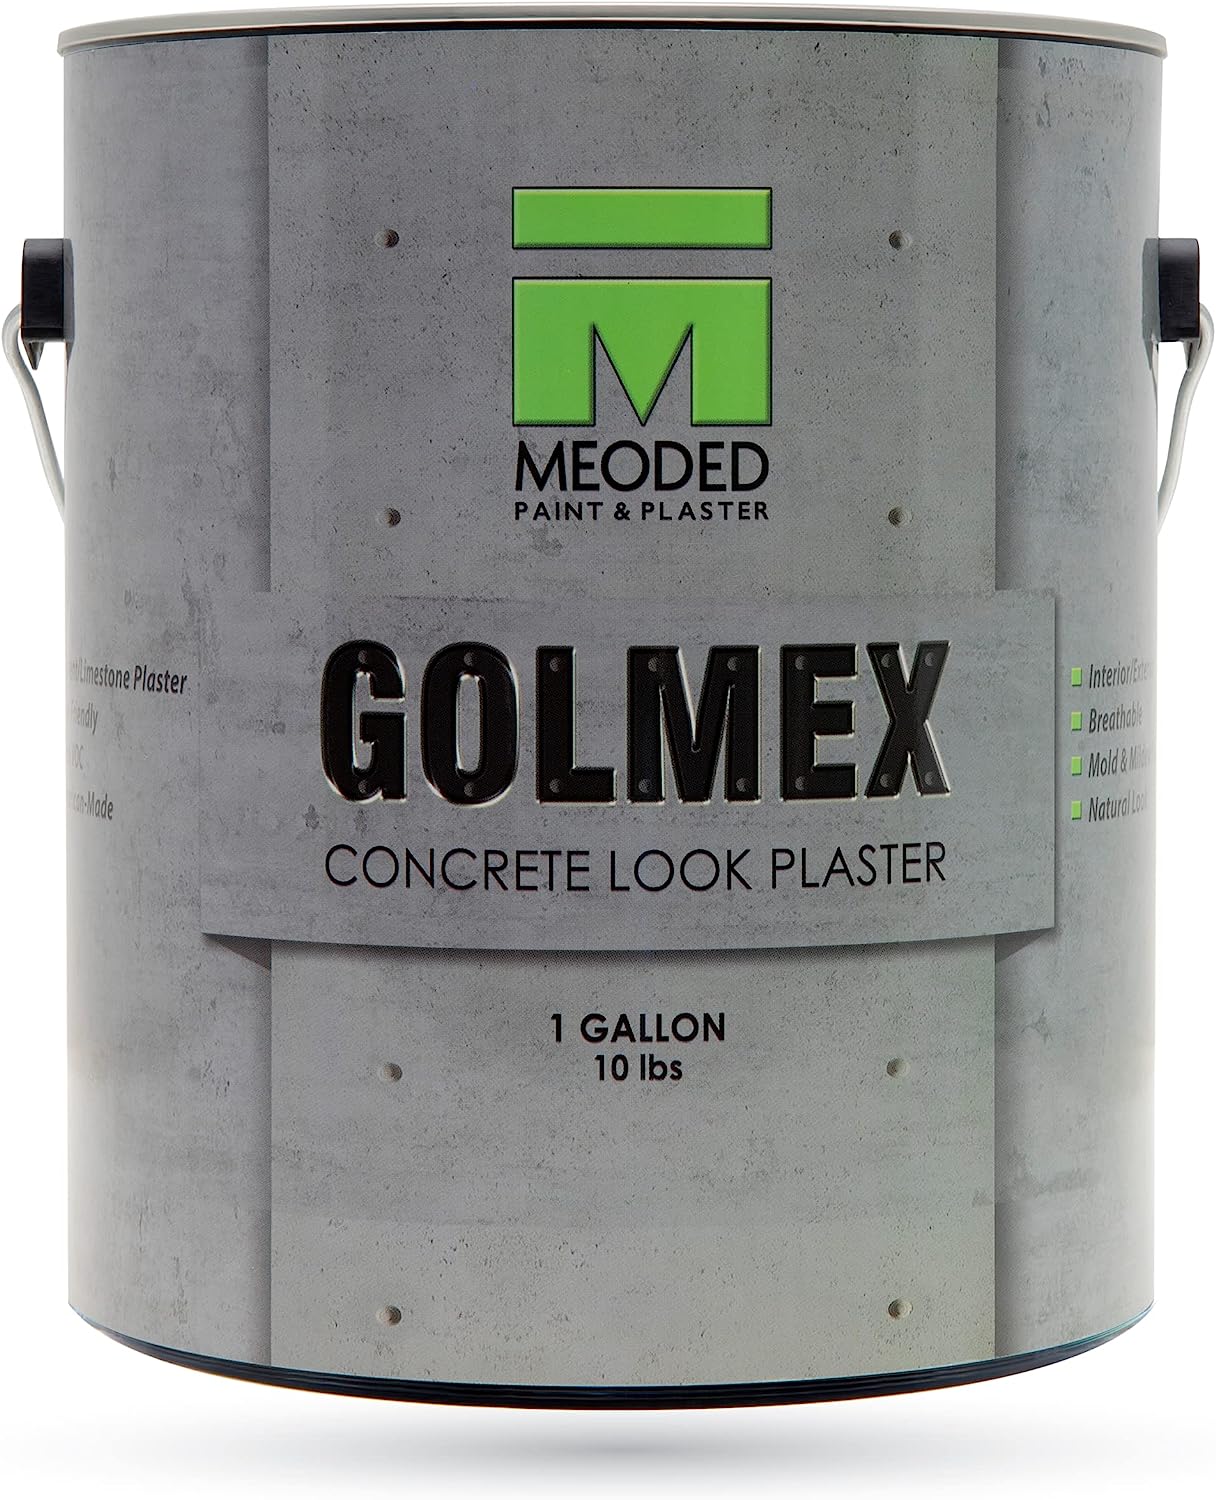 Meoded Paint & Plaster Golmex Concrete Look Plaster, [...]